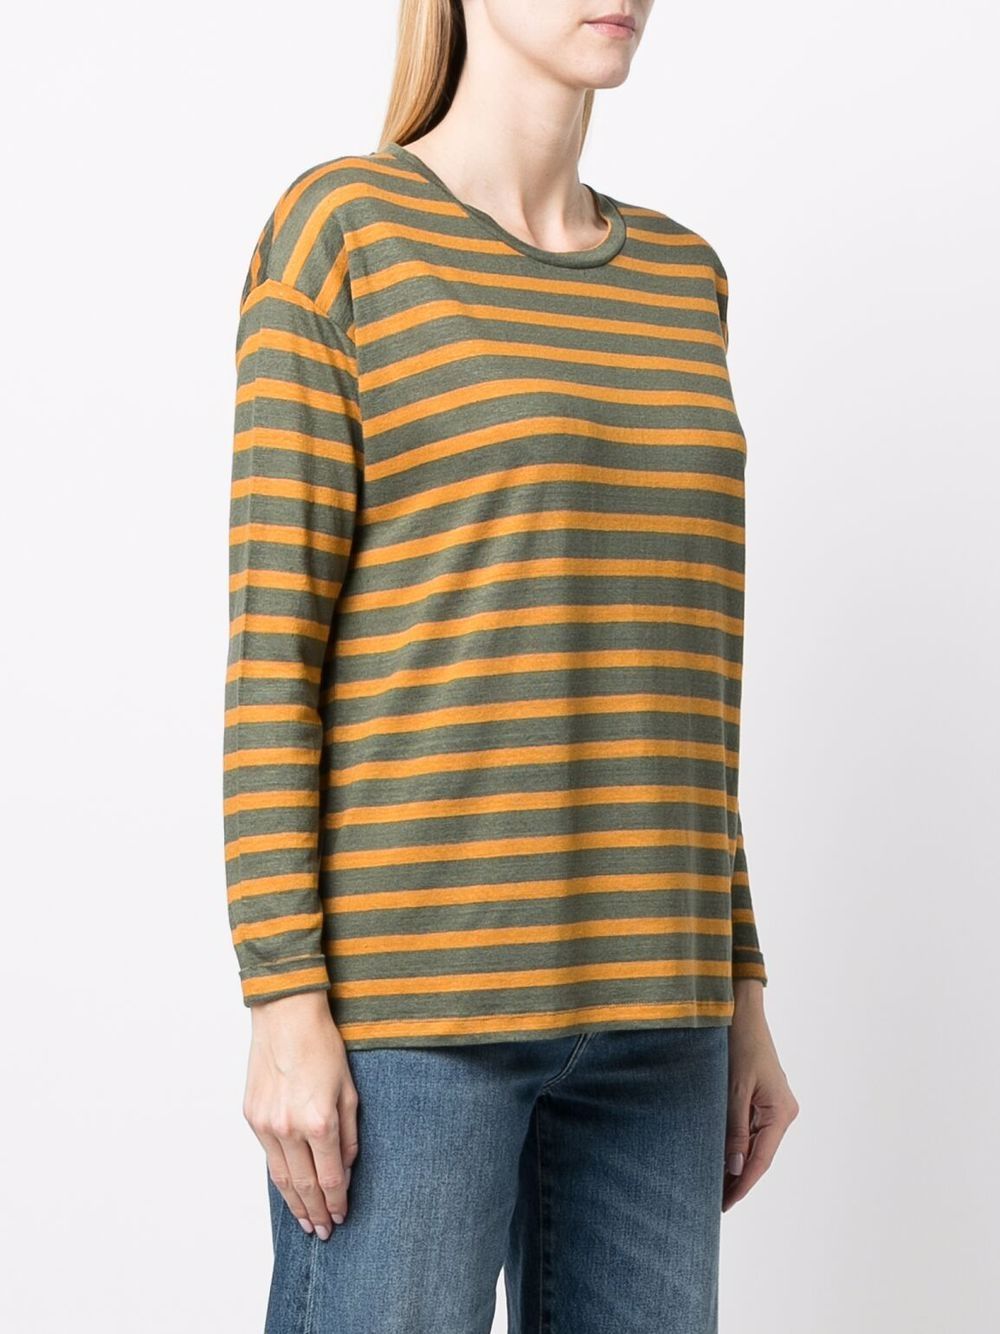 PaulaLinen Striped Long Sleeved T-Shirt at Fashion Clinic